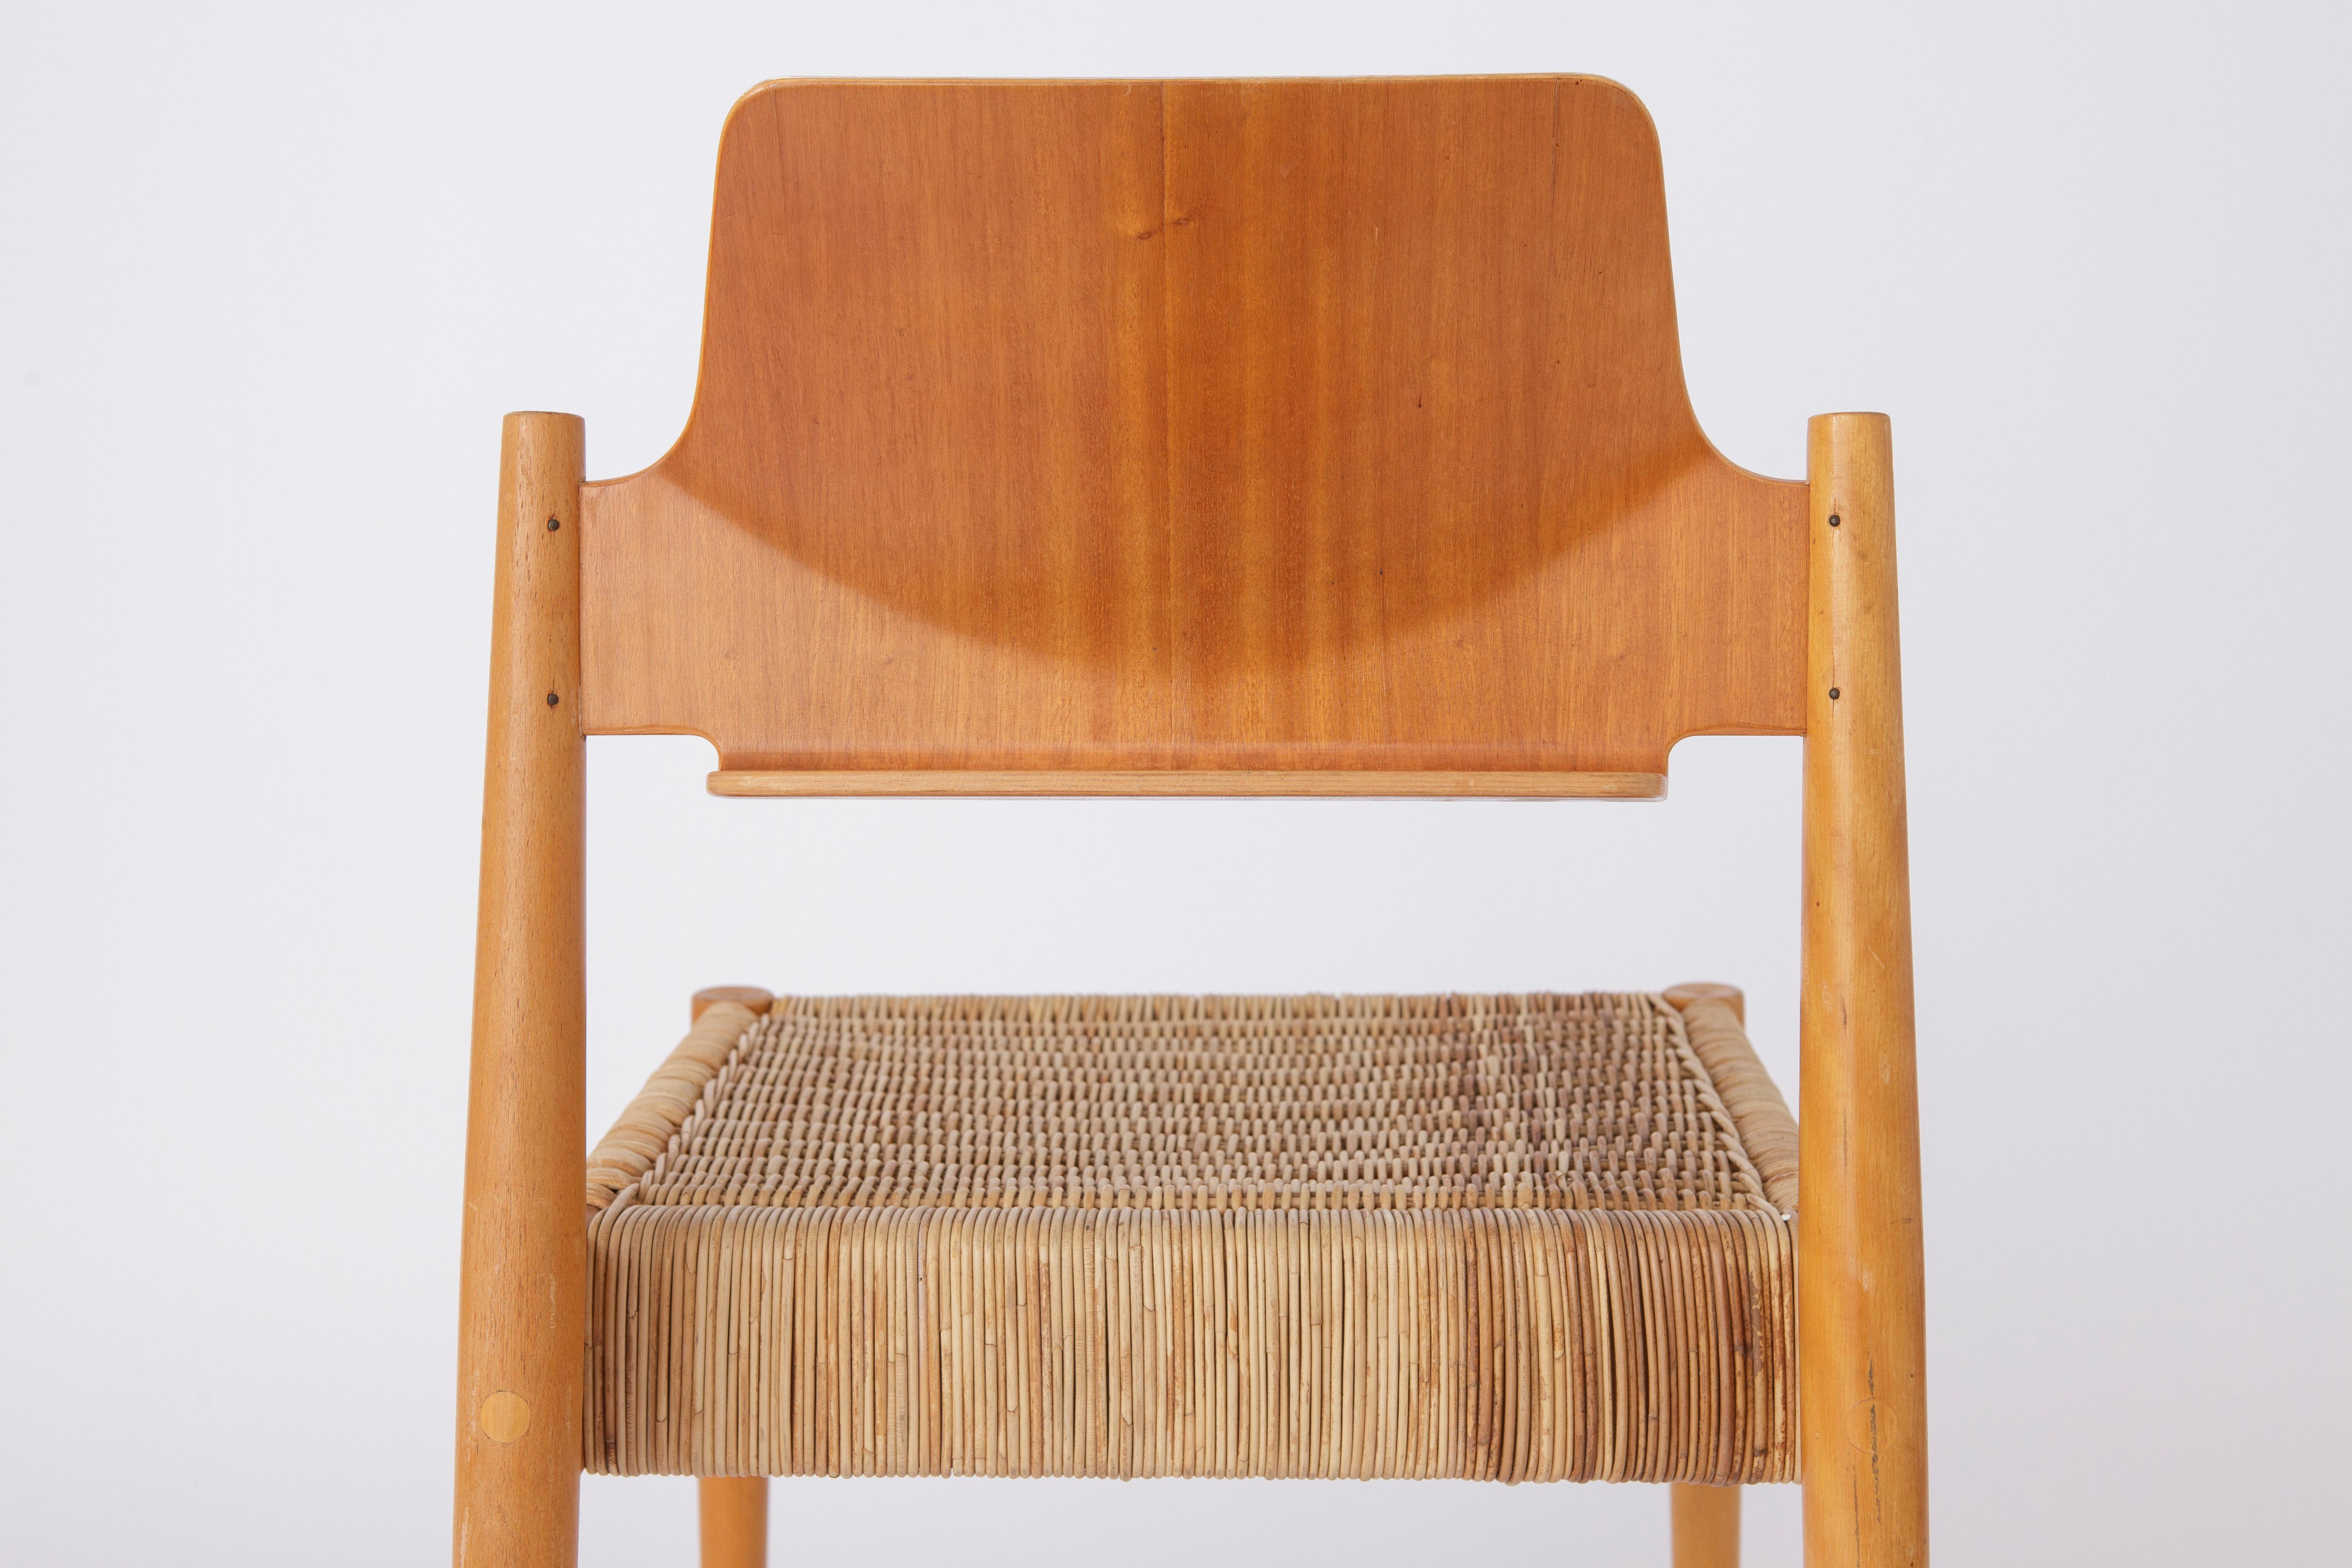 6 Chairs Egon Eiermann Chairs #SE19 Bauhaus Germany 1950s Vintage For Sale 3